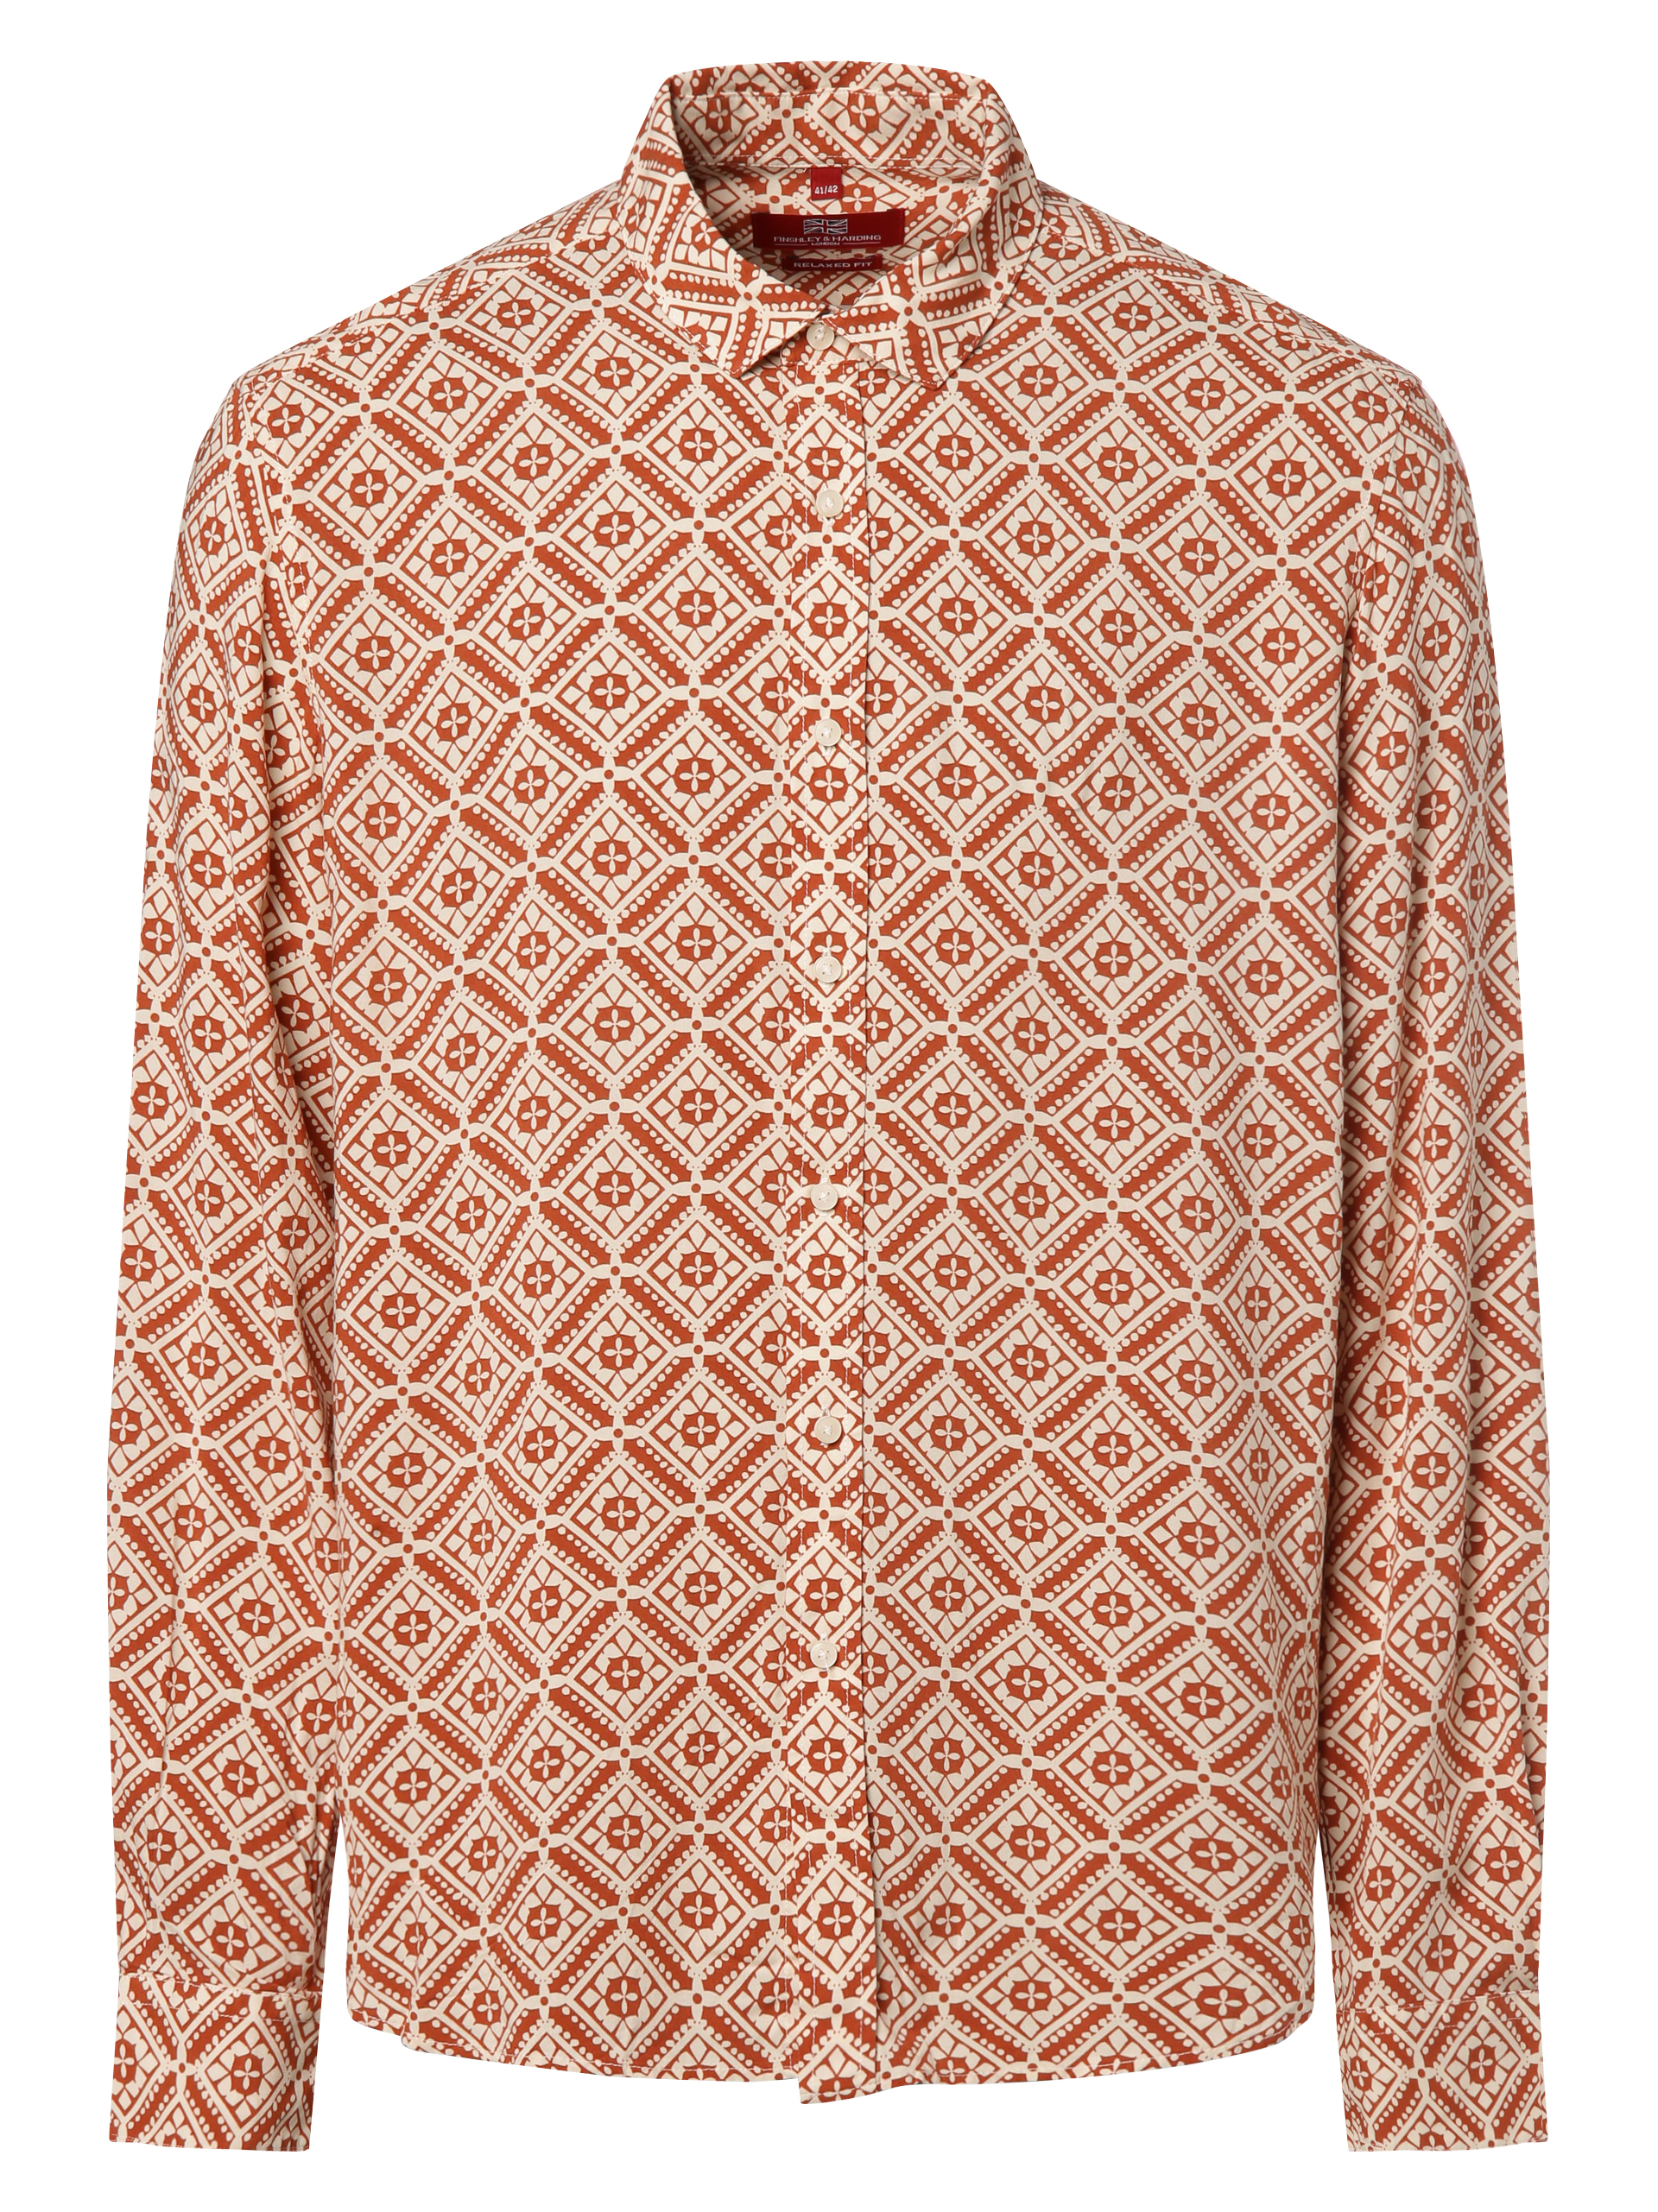 Рубашка Finshley & Harding London, оранжевый цена и фото